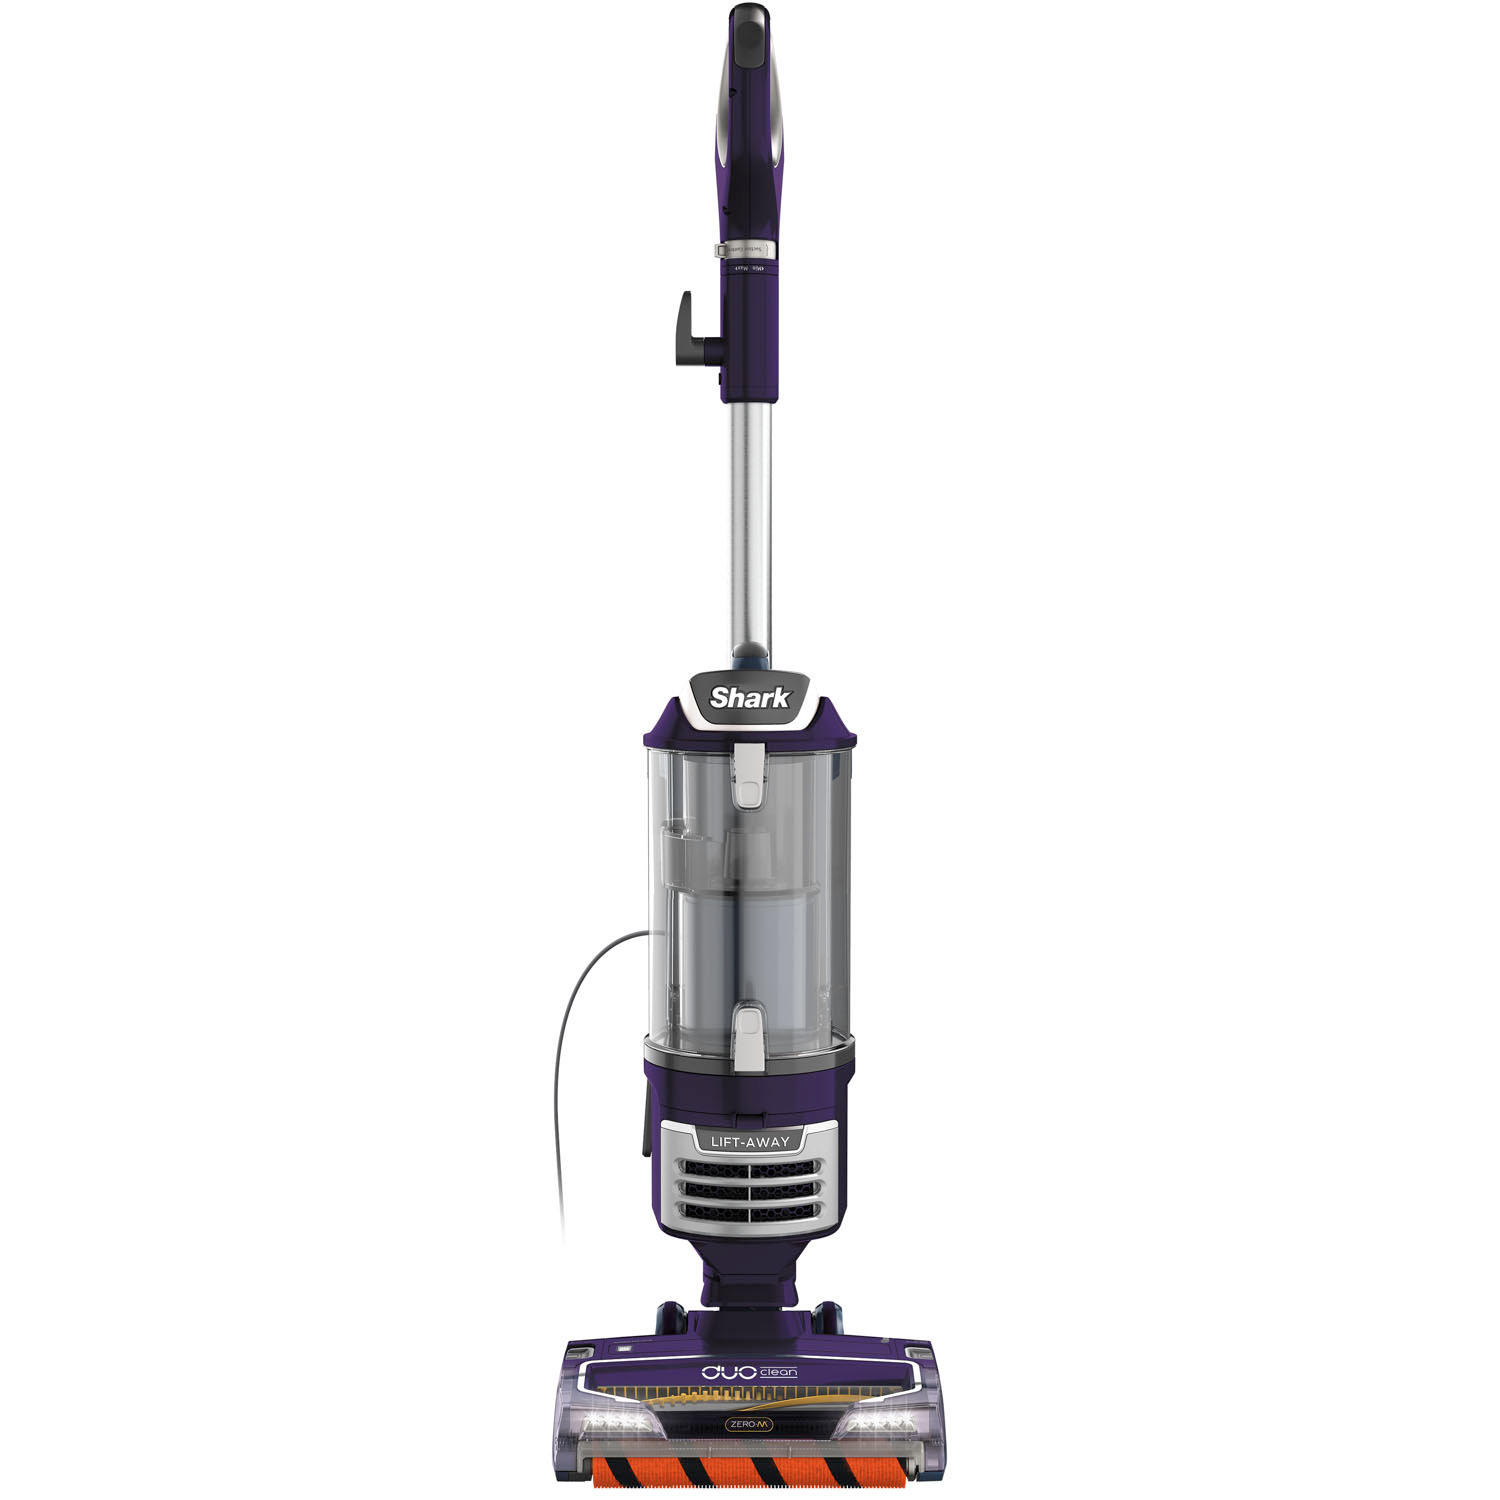 Shark Zu785 Rotator Lift-Away DuoClean Pro Upright Vacuum with Self-Cleaning Brushroll